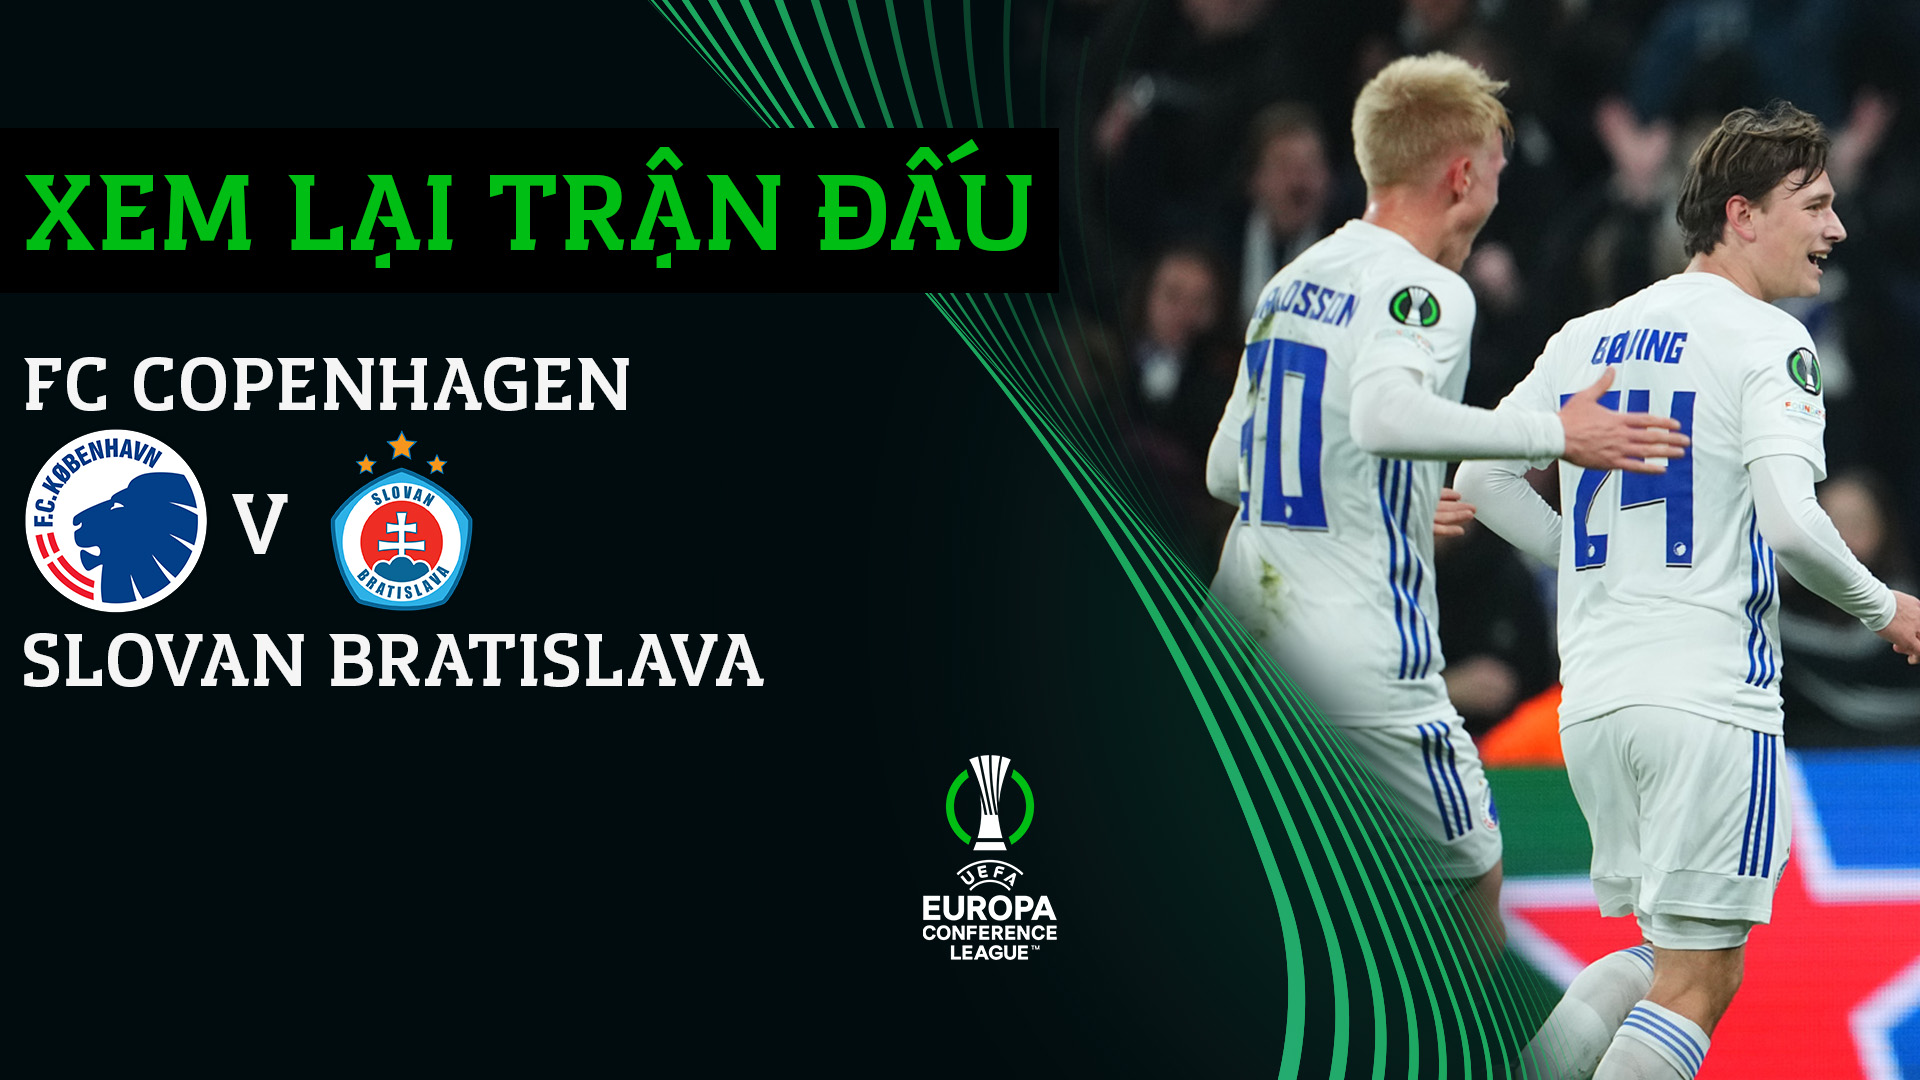 FC Copenhagen - Slovan Bratislava | Xem lại trận đấu - UEFA Europa Conference League